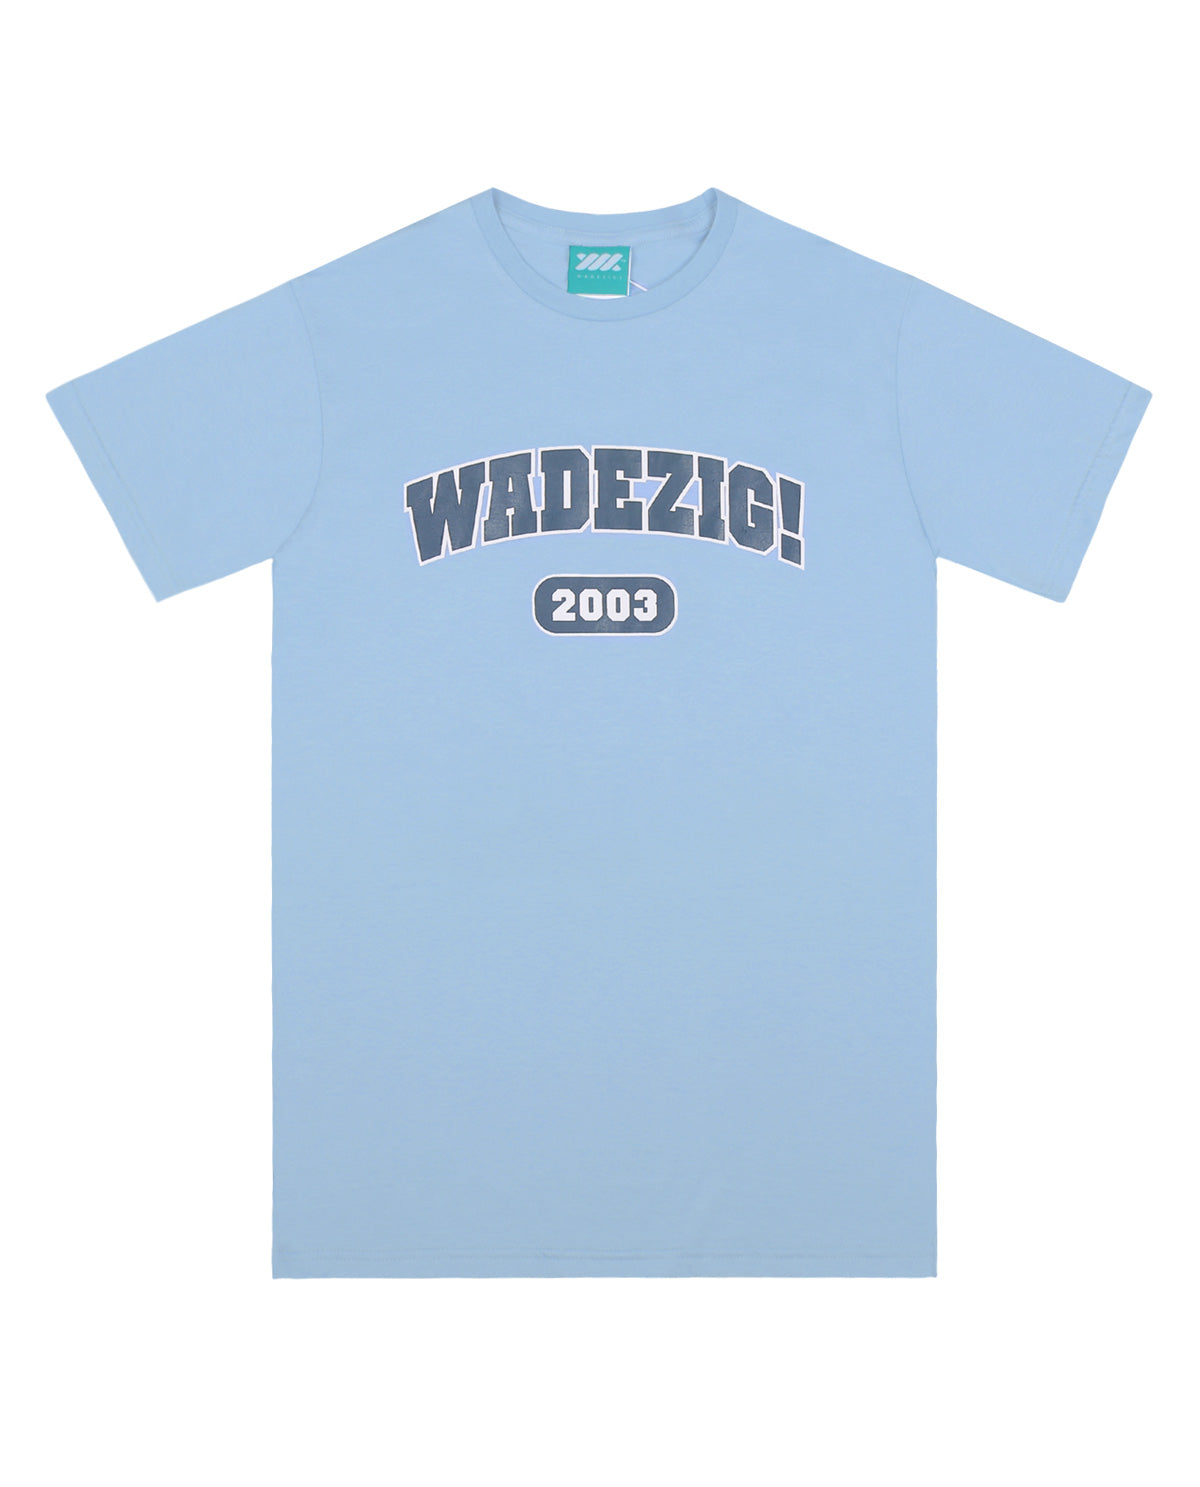 WADEZIG! T-SHIRT - ARCH BLUE TEES